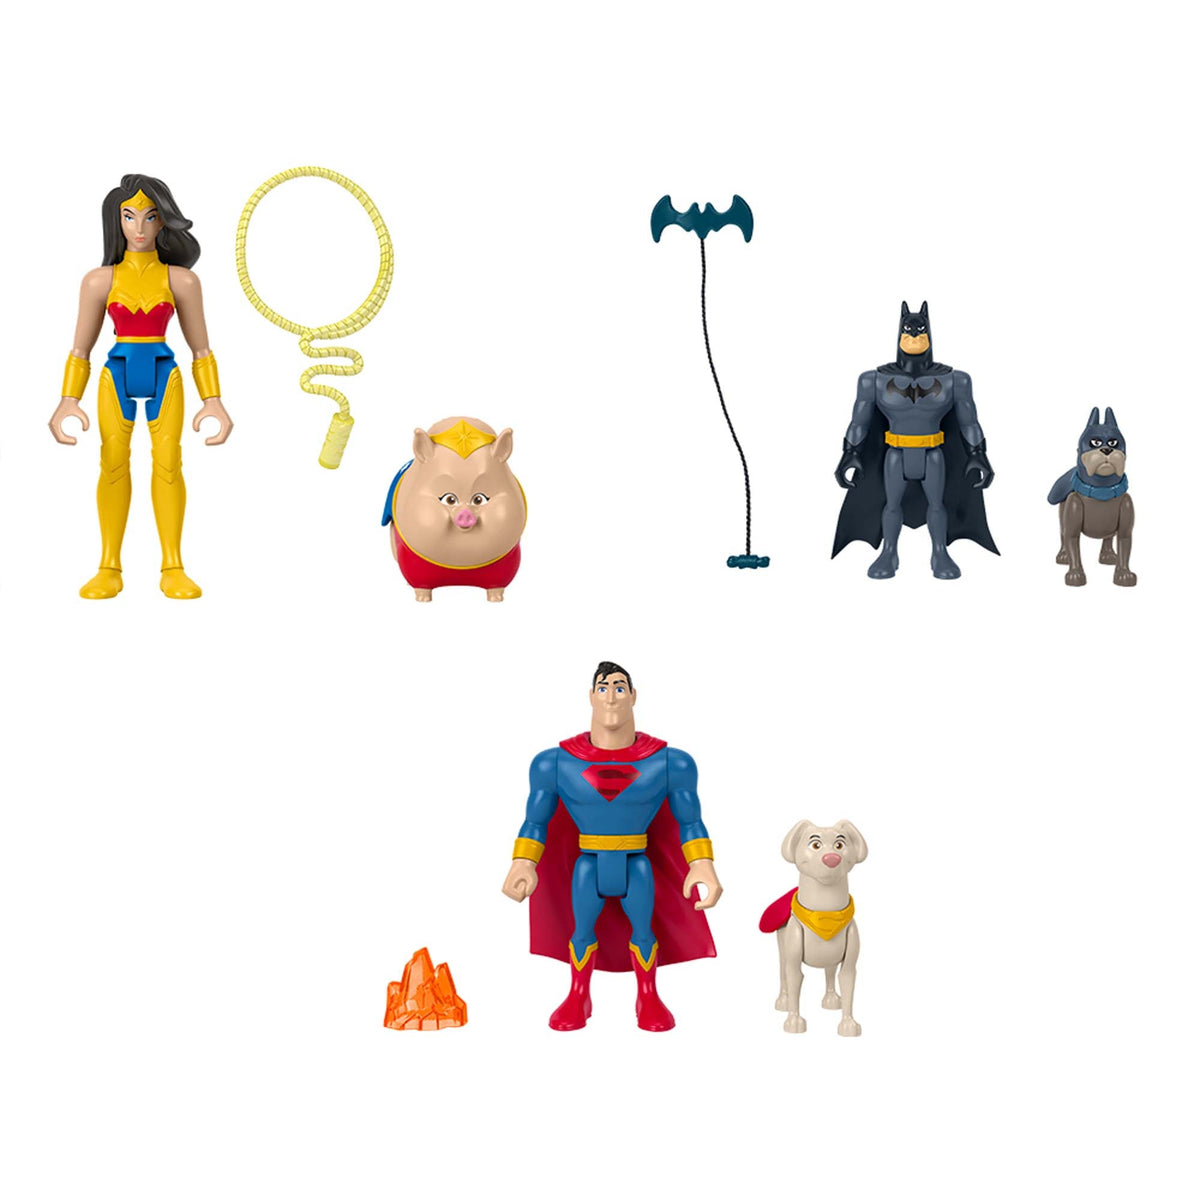 JOUET K.I.D. INC. Impulse Buying DC Super Pets Hero and Animals Figures, Assortment, 1 Count